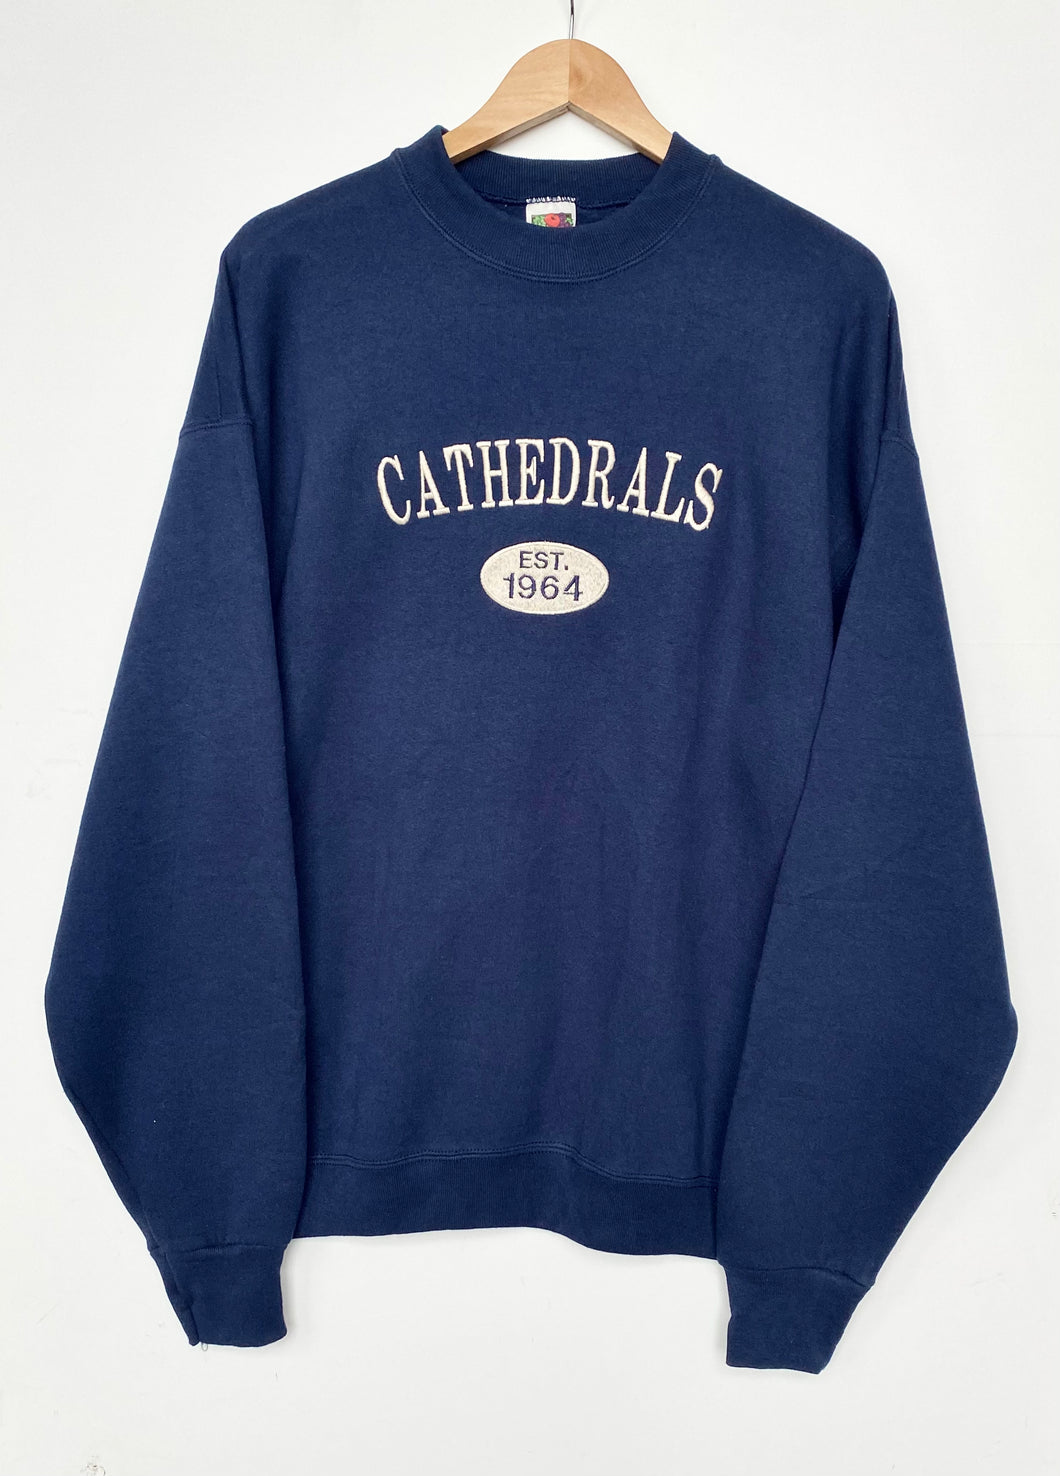 Cathedrals American College sweatshirt (XL)